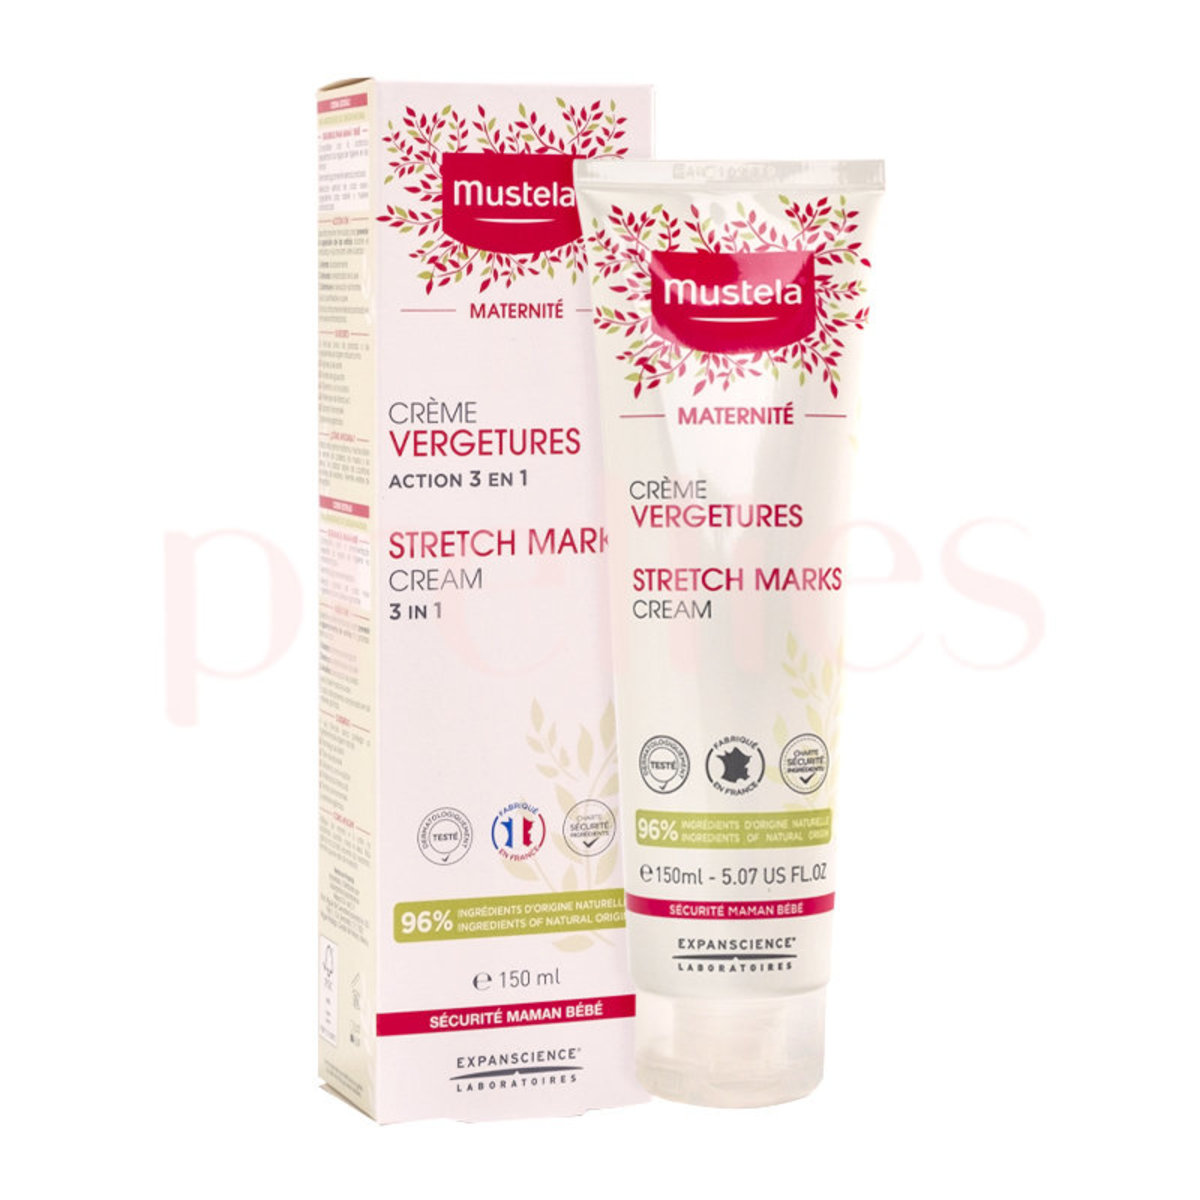 Mustela, Maternite Stretch Marks Cream (3in1) 150ml (Parallel Import)